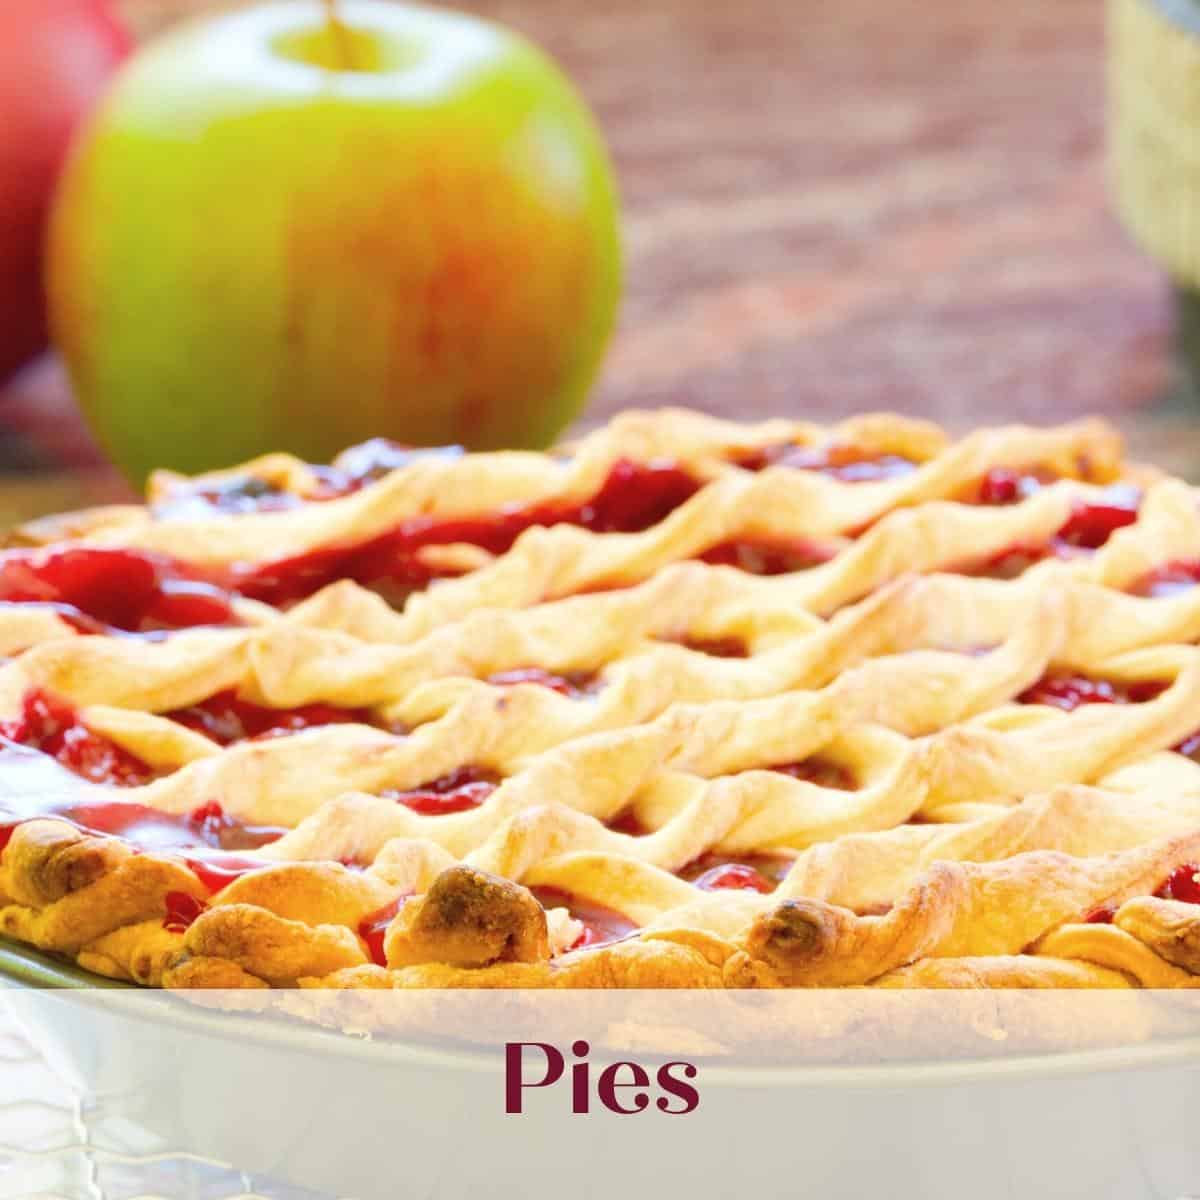 Pie category graphic with cherry lattice pie.